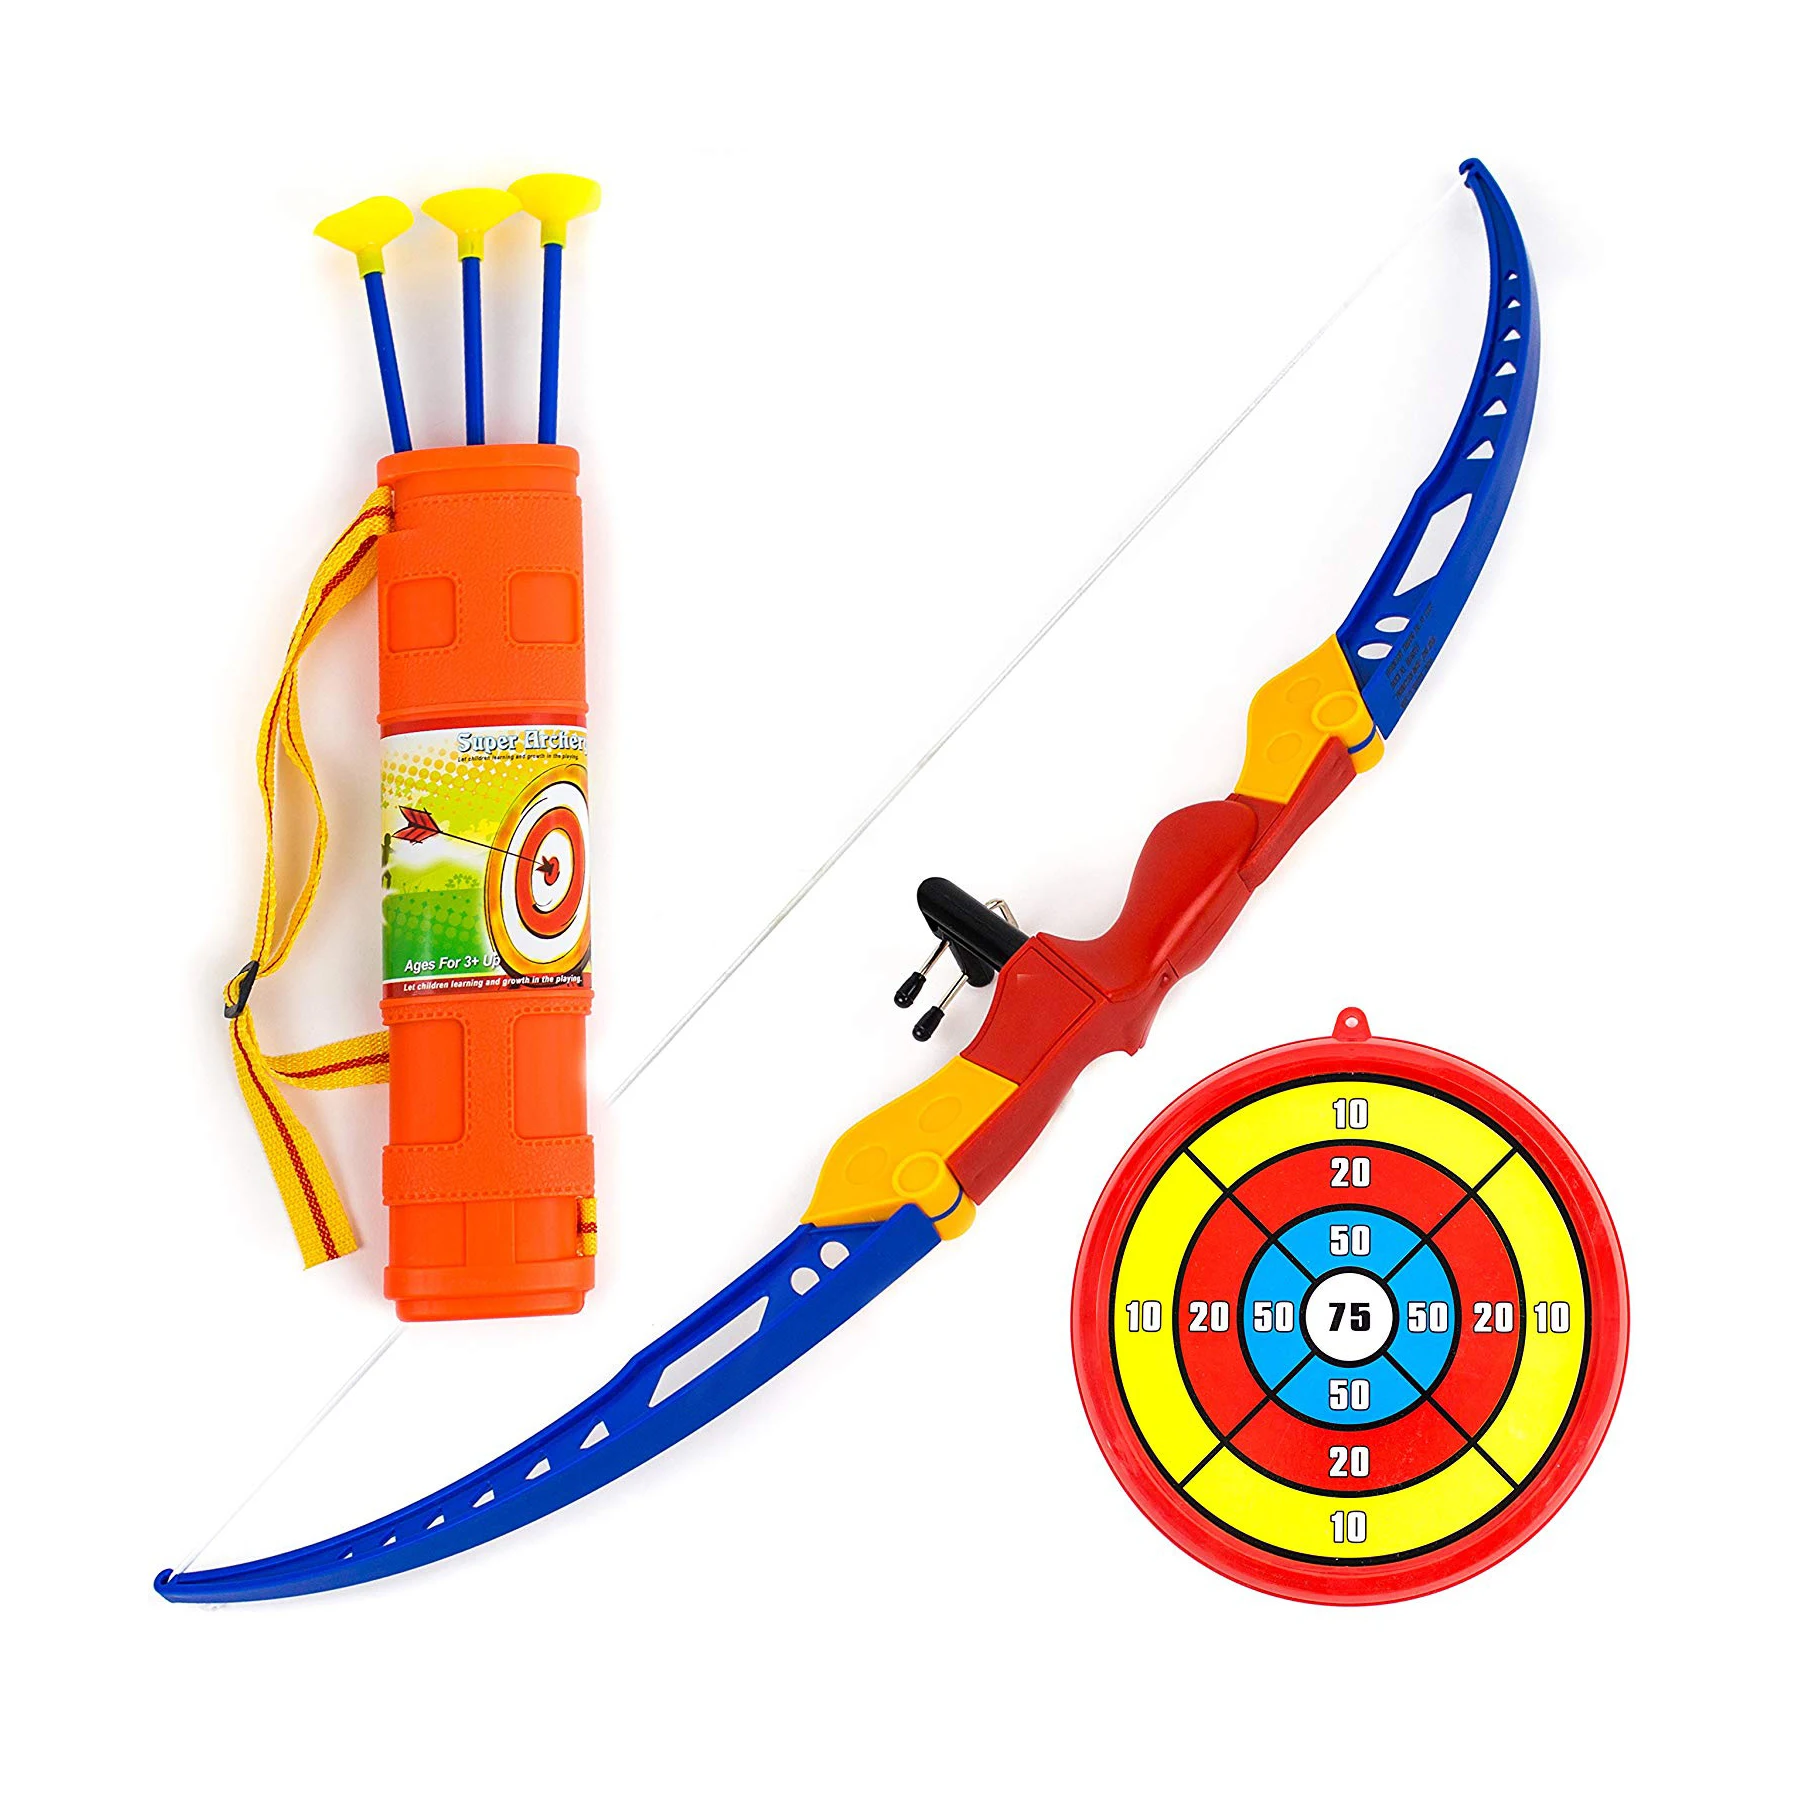 children's archery set with target